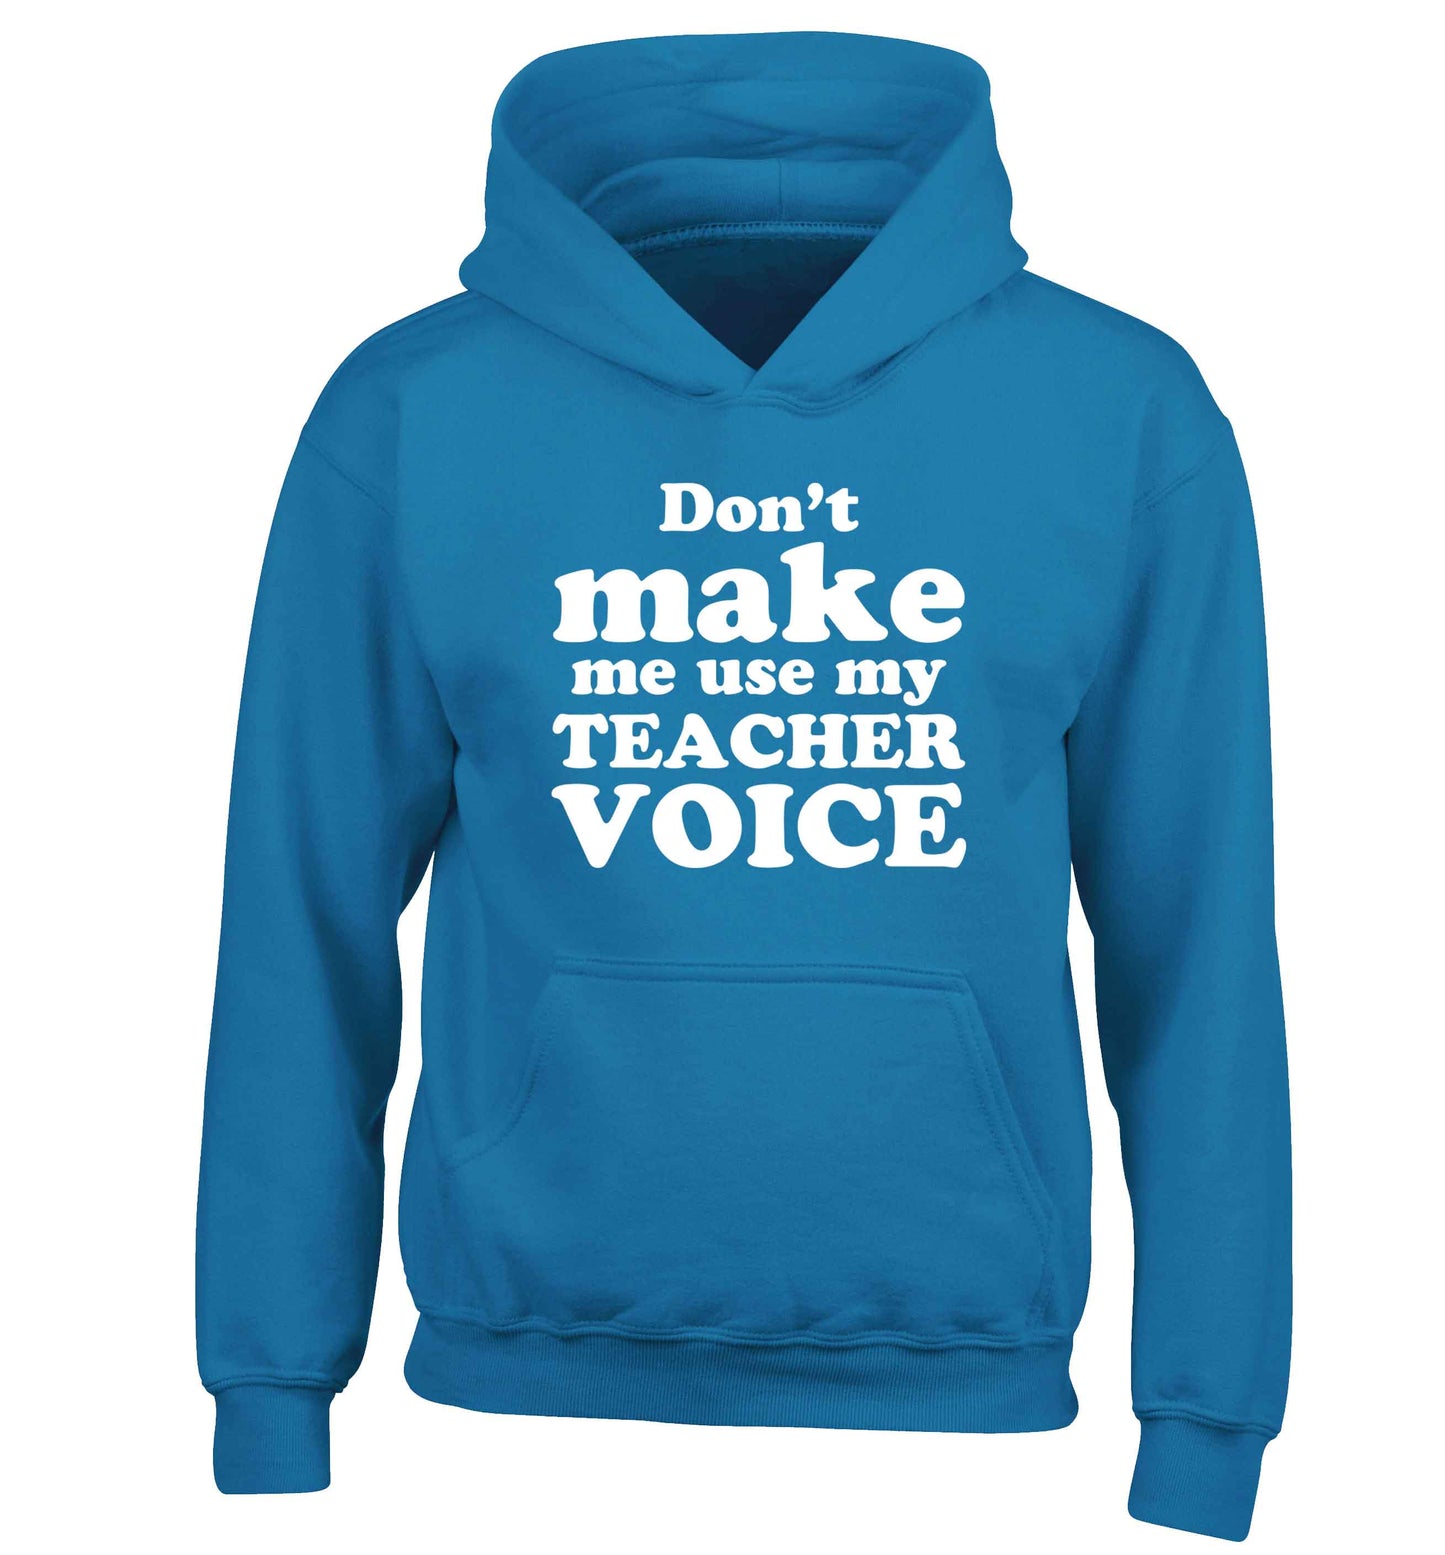 Don't make me use my teacher voice children's blue hoodie 12-13 Years